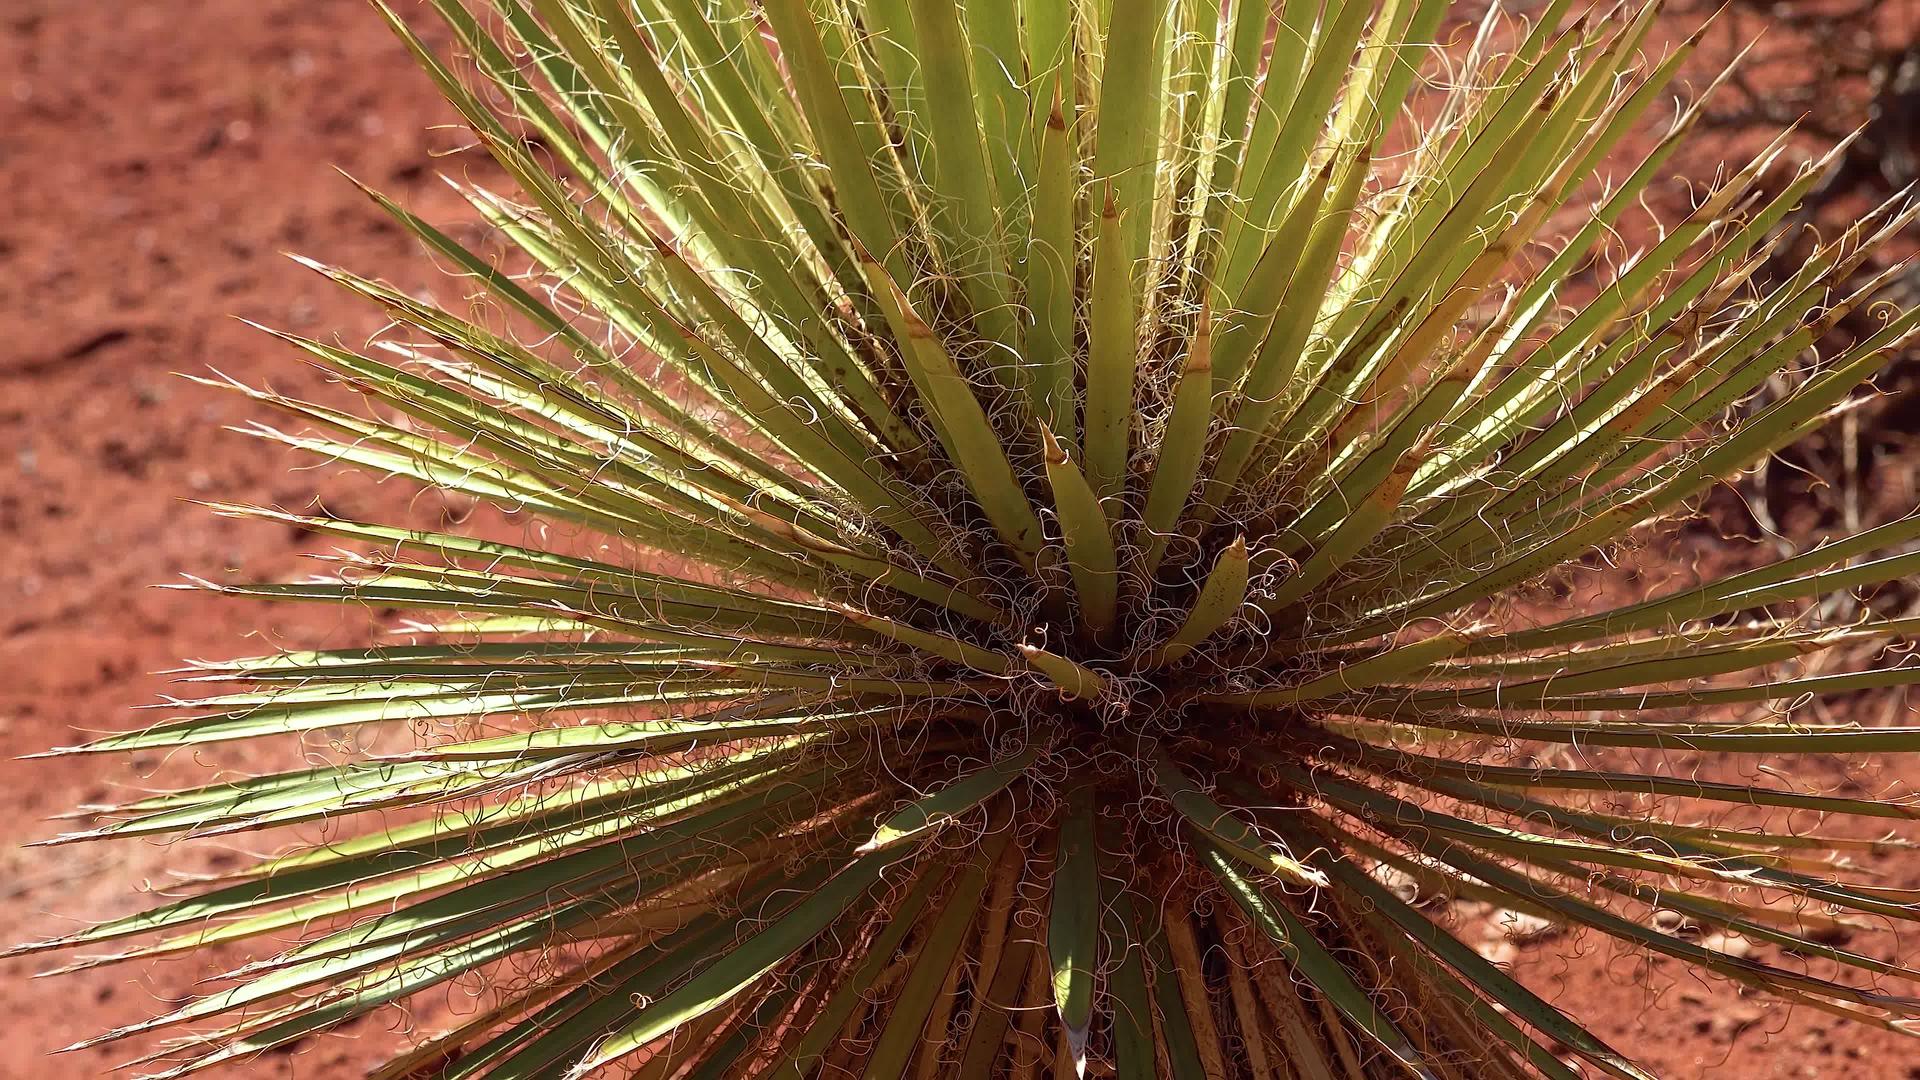 Yucca植物峡谷地moabutah视频的预览图